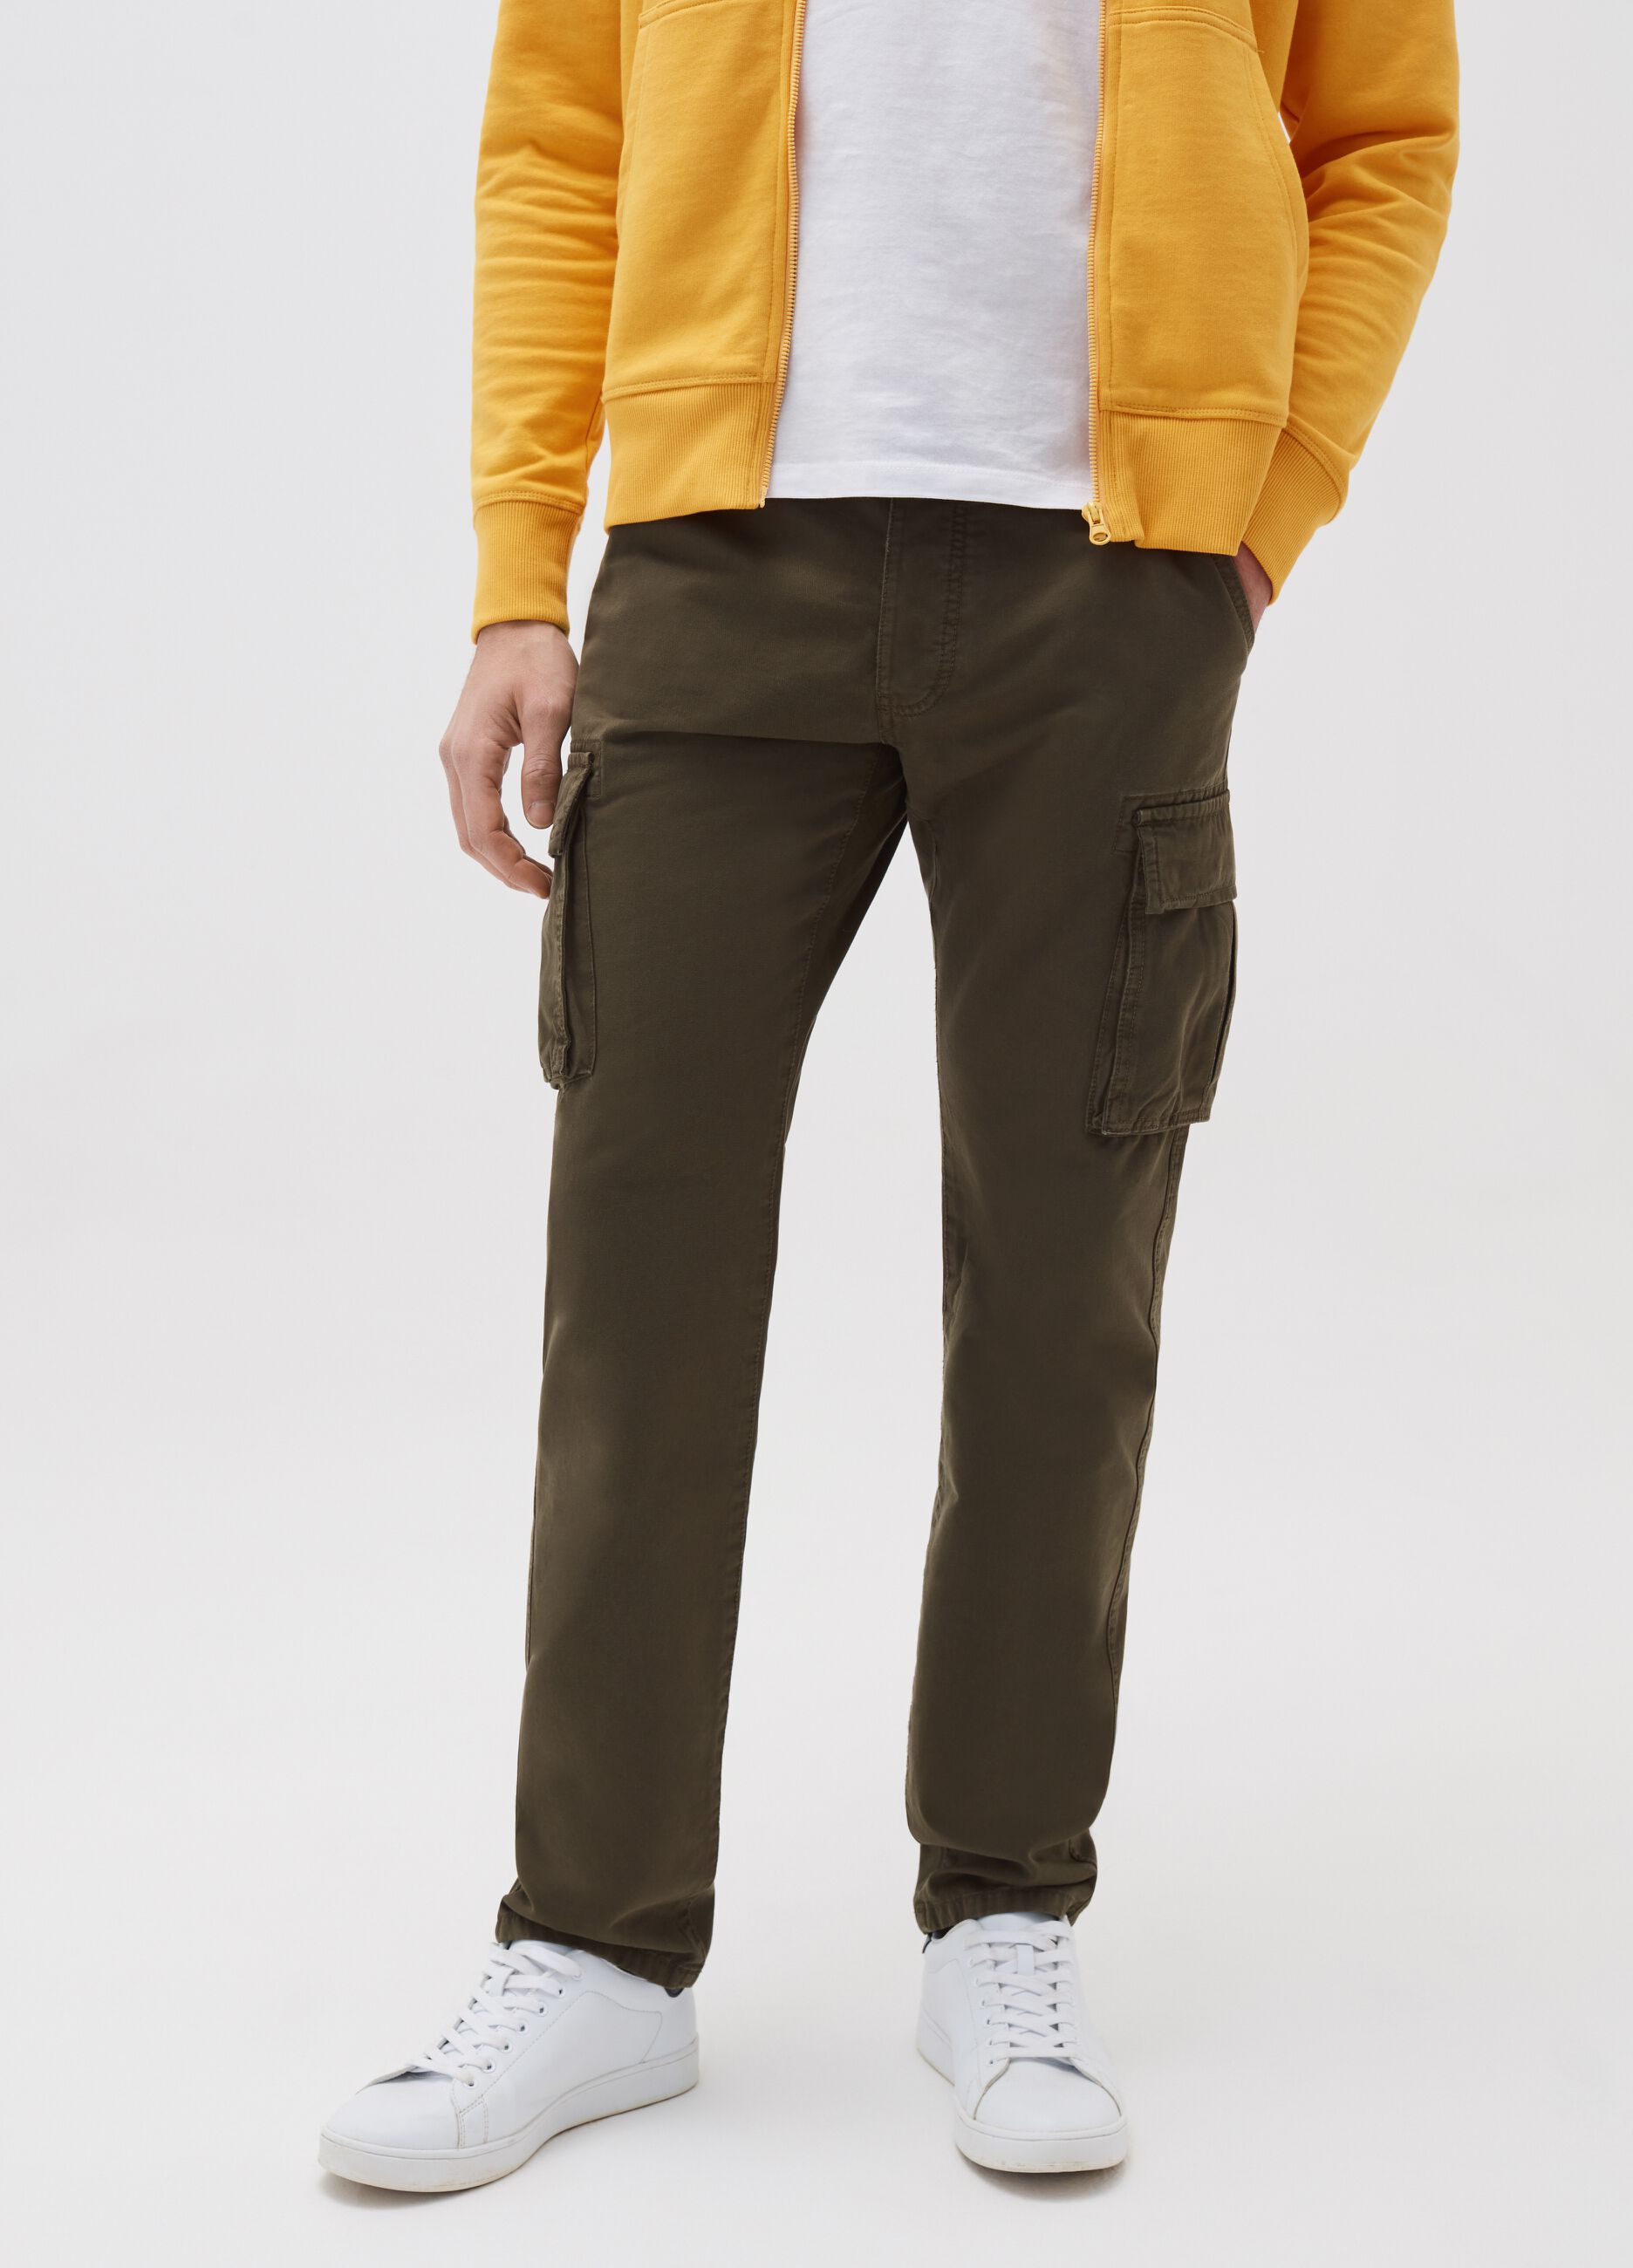 Solid colour 100% cotton cargo trousers